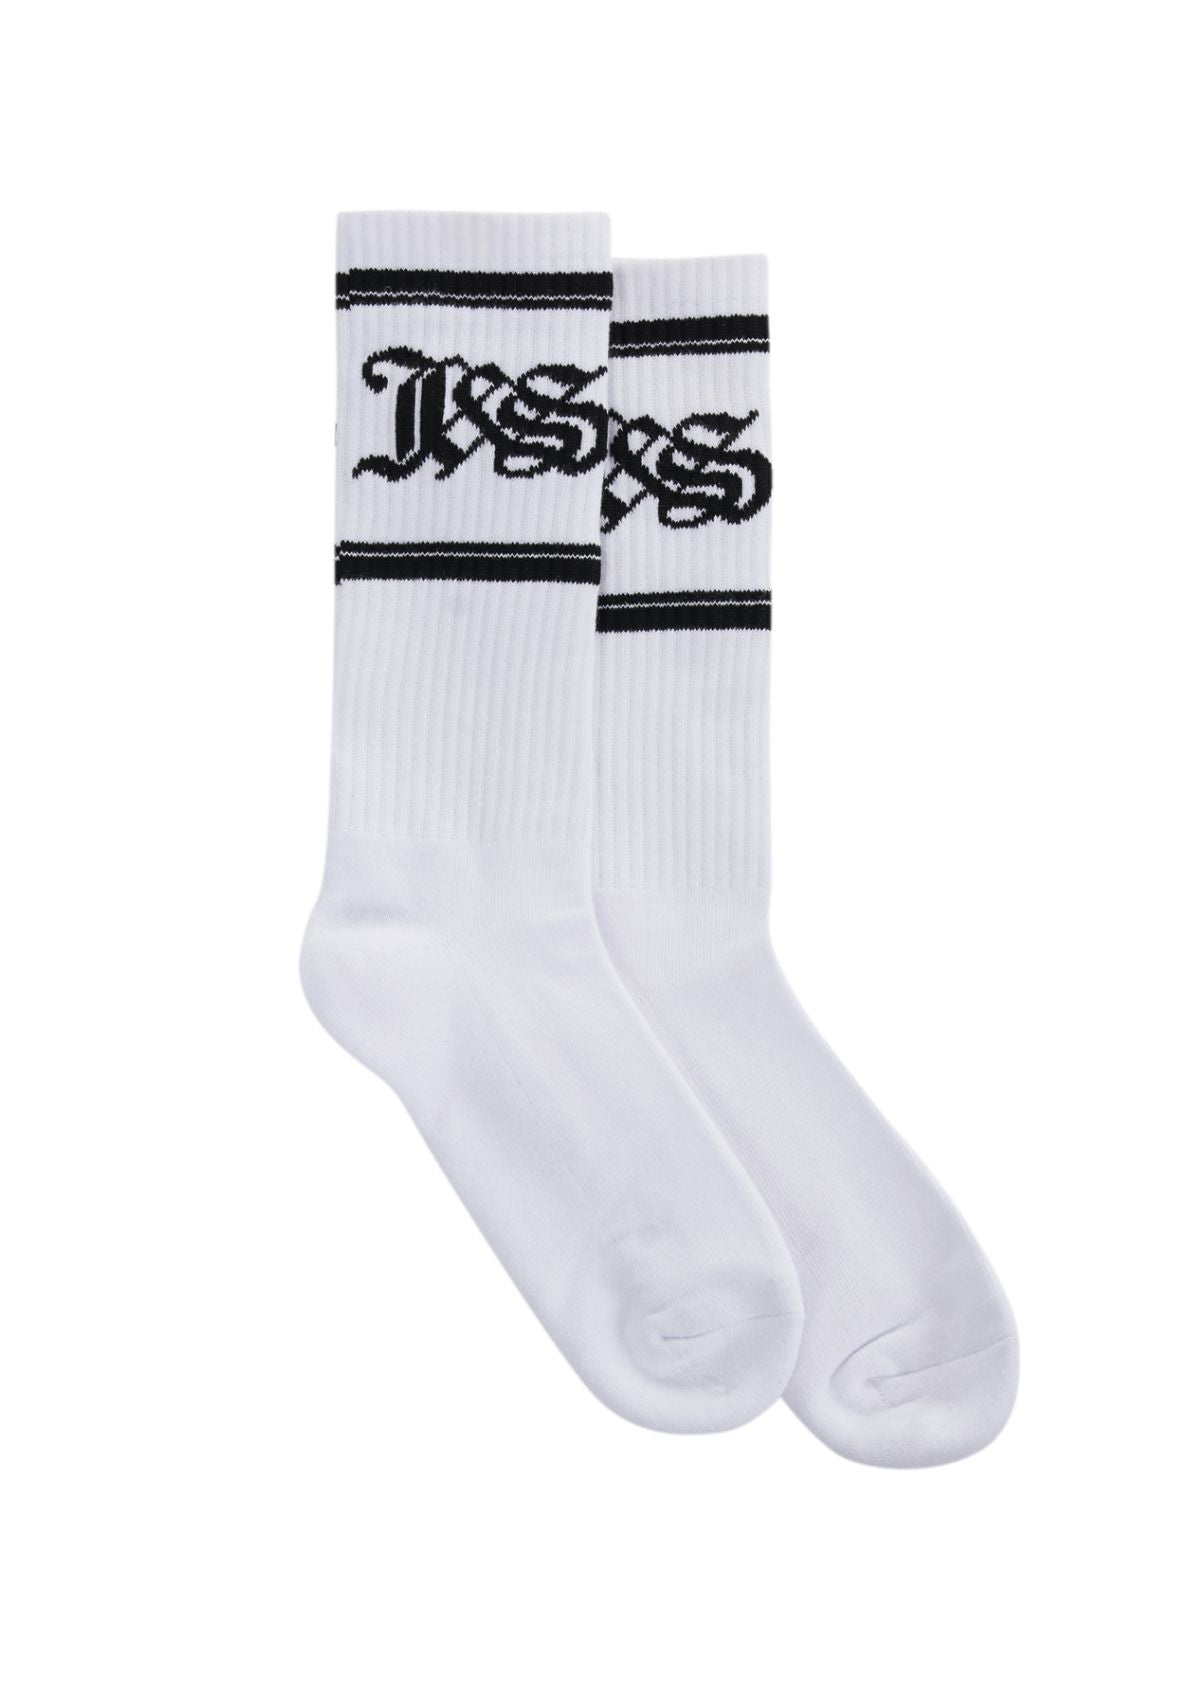 J&S Mono Socks